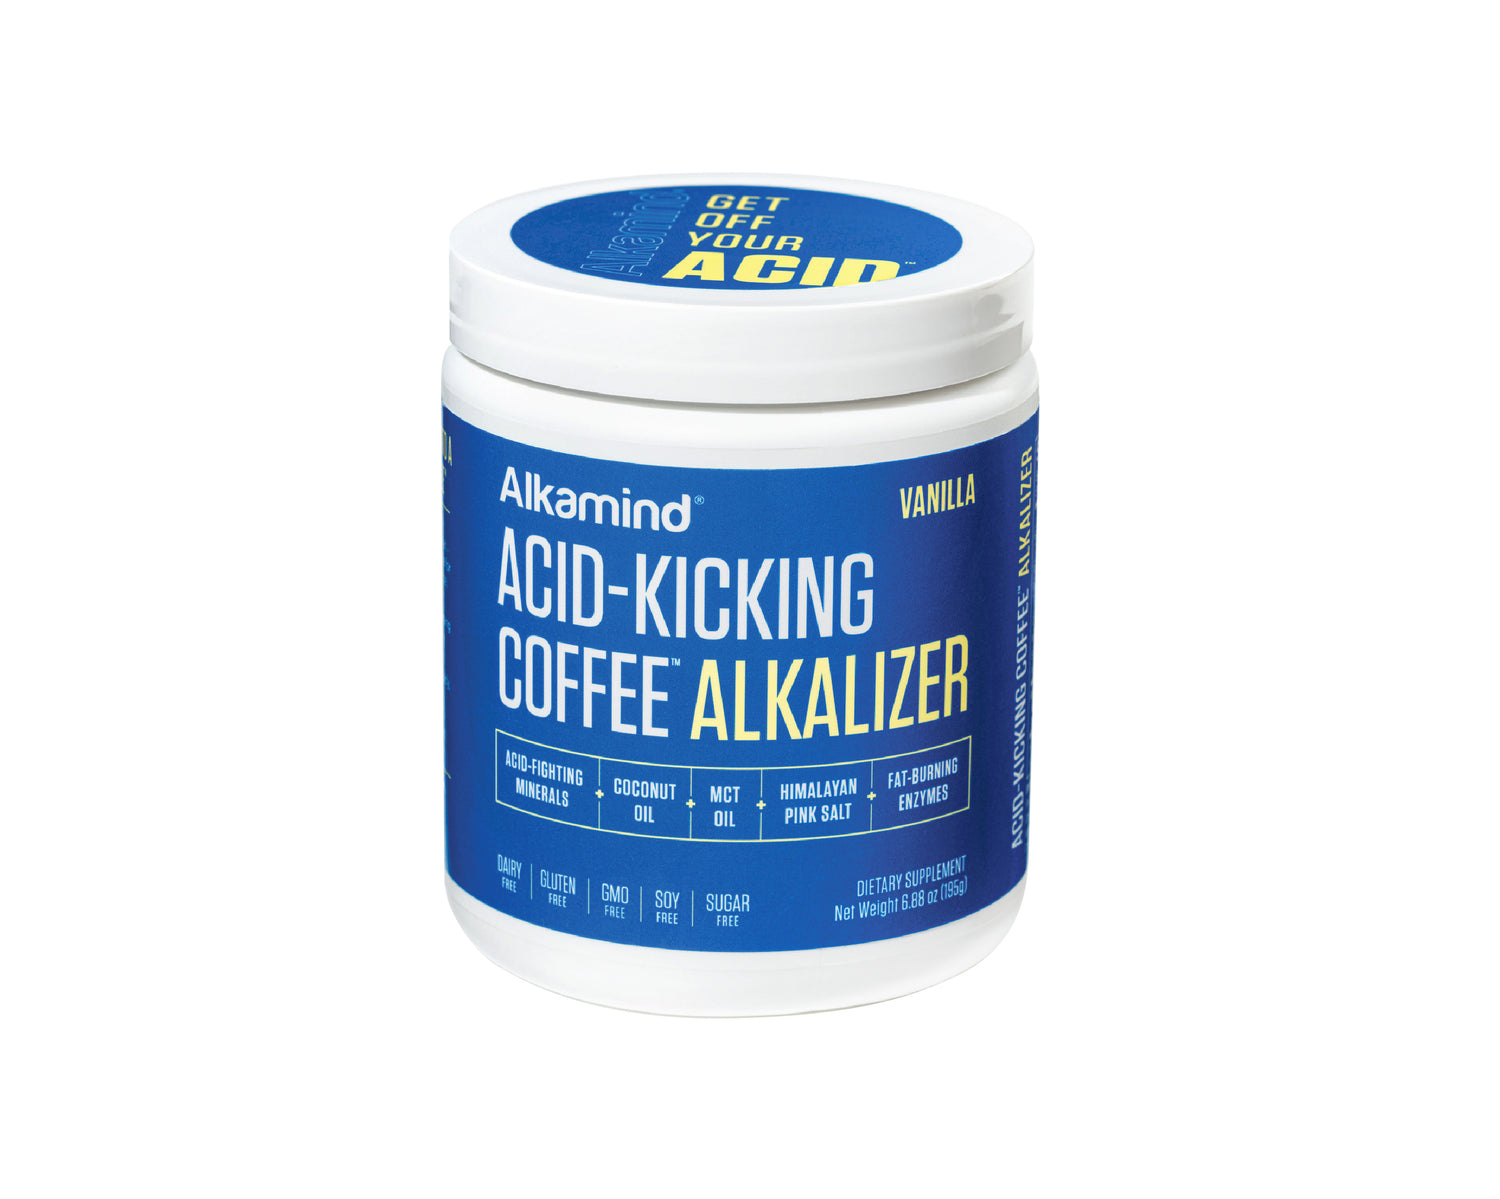 Acid-Kicking Coffee Vanilla Alkalizer